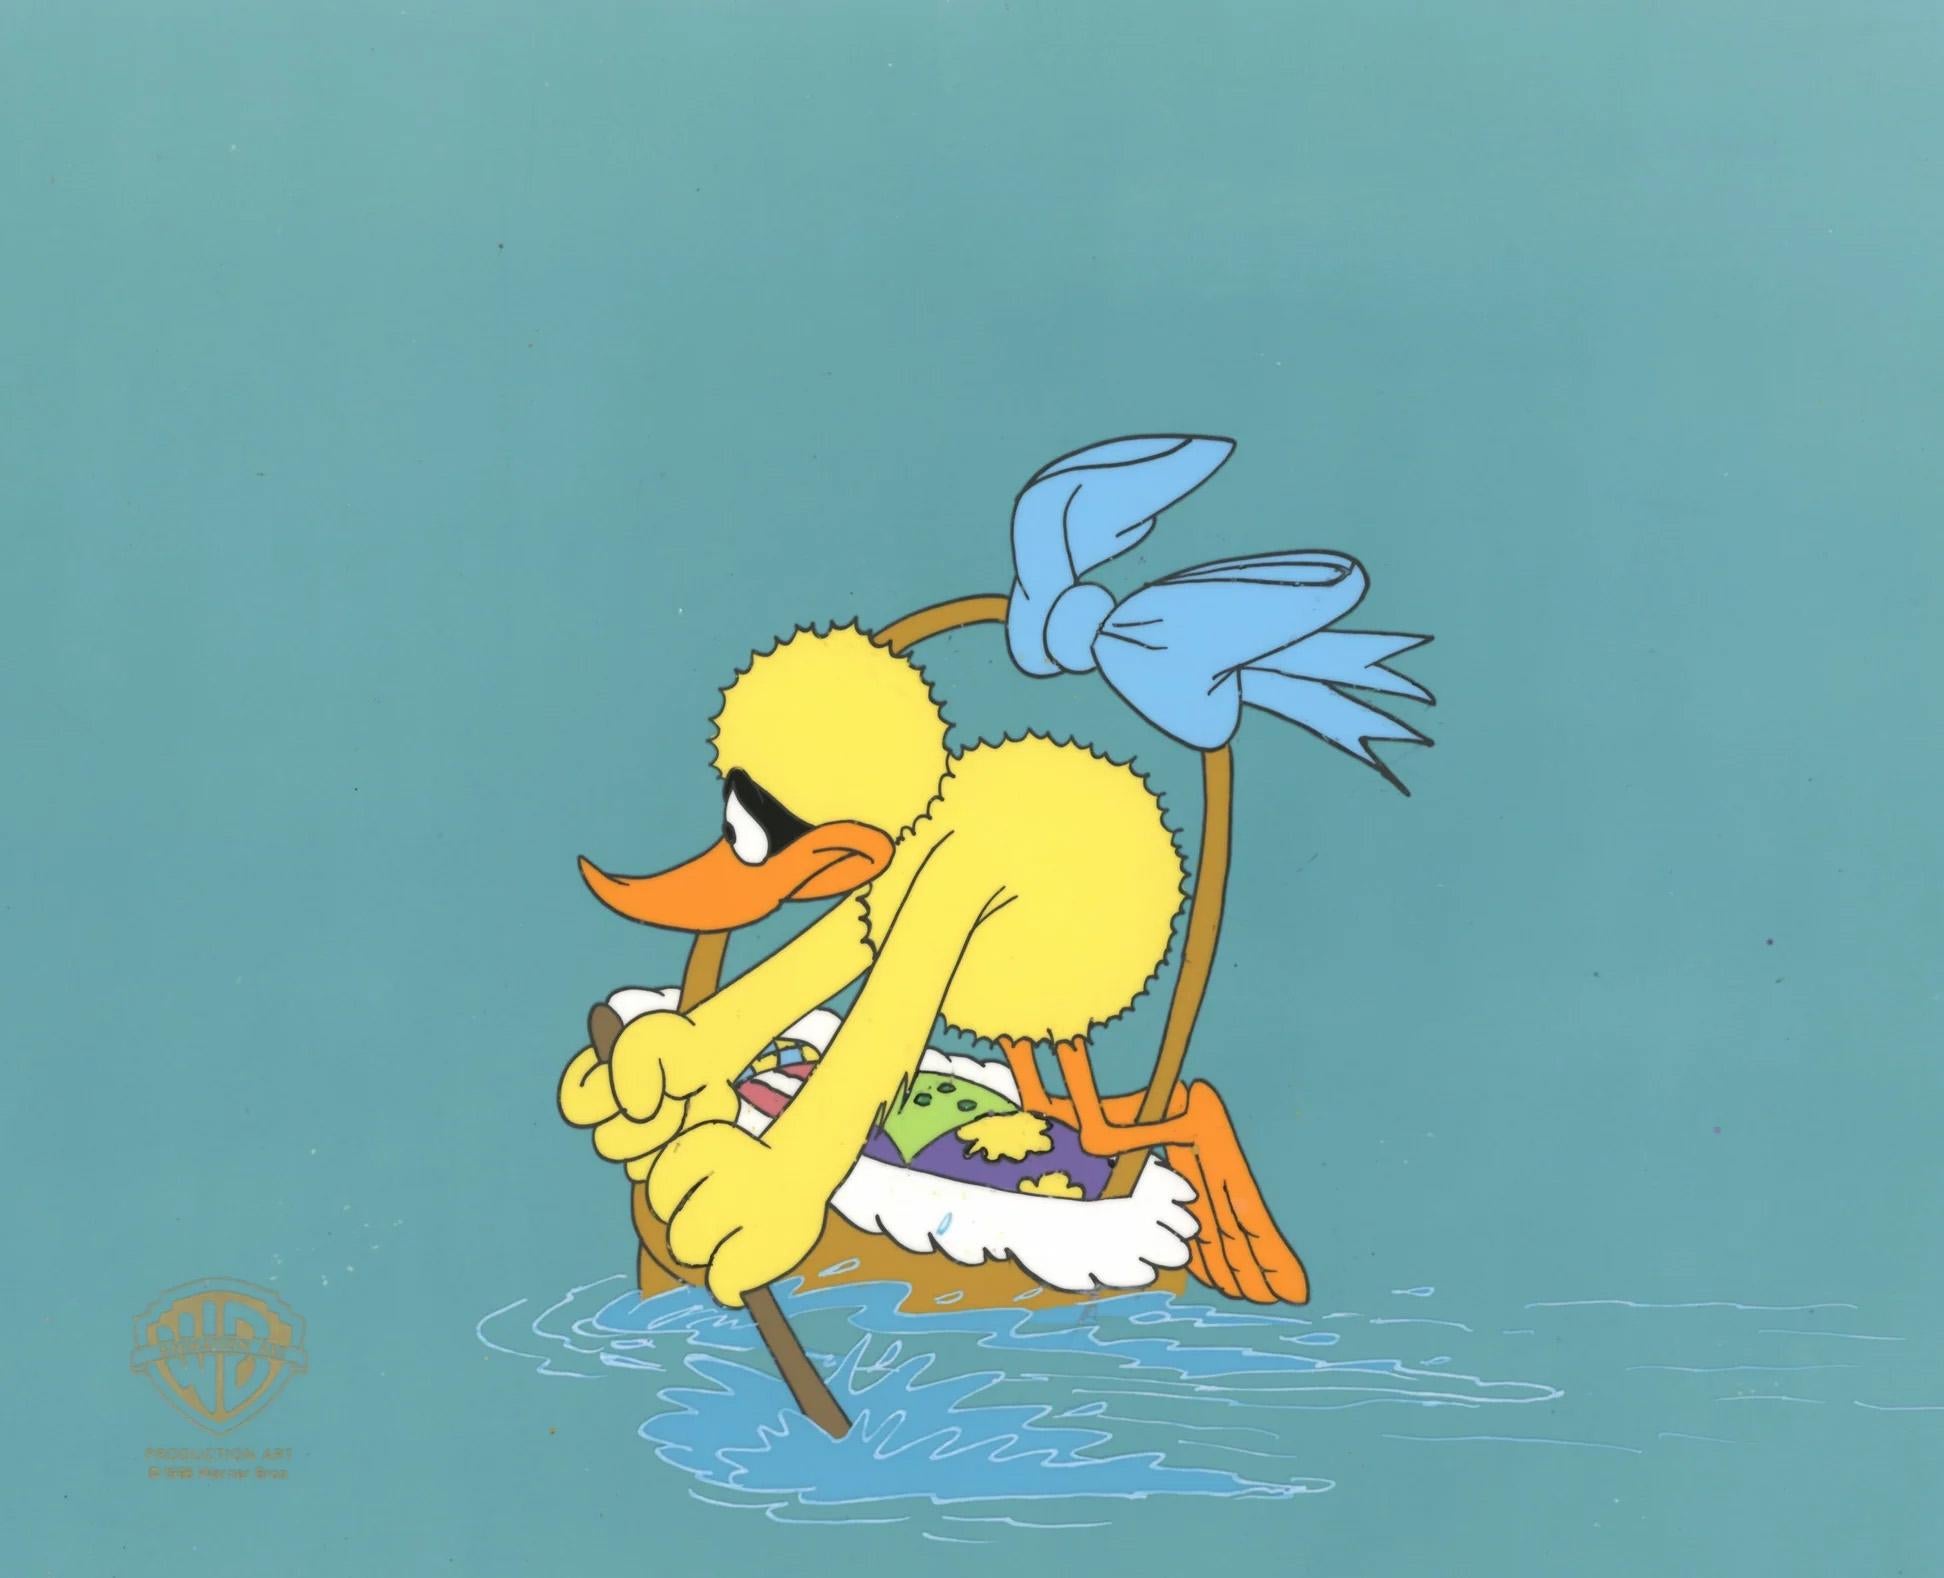 Looney Tunes Original Production Cel: Daffy Duck - Art by Looney Tunes Studio Artists